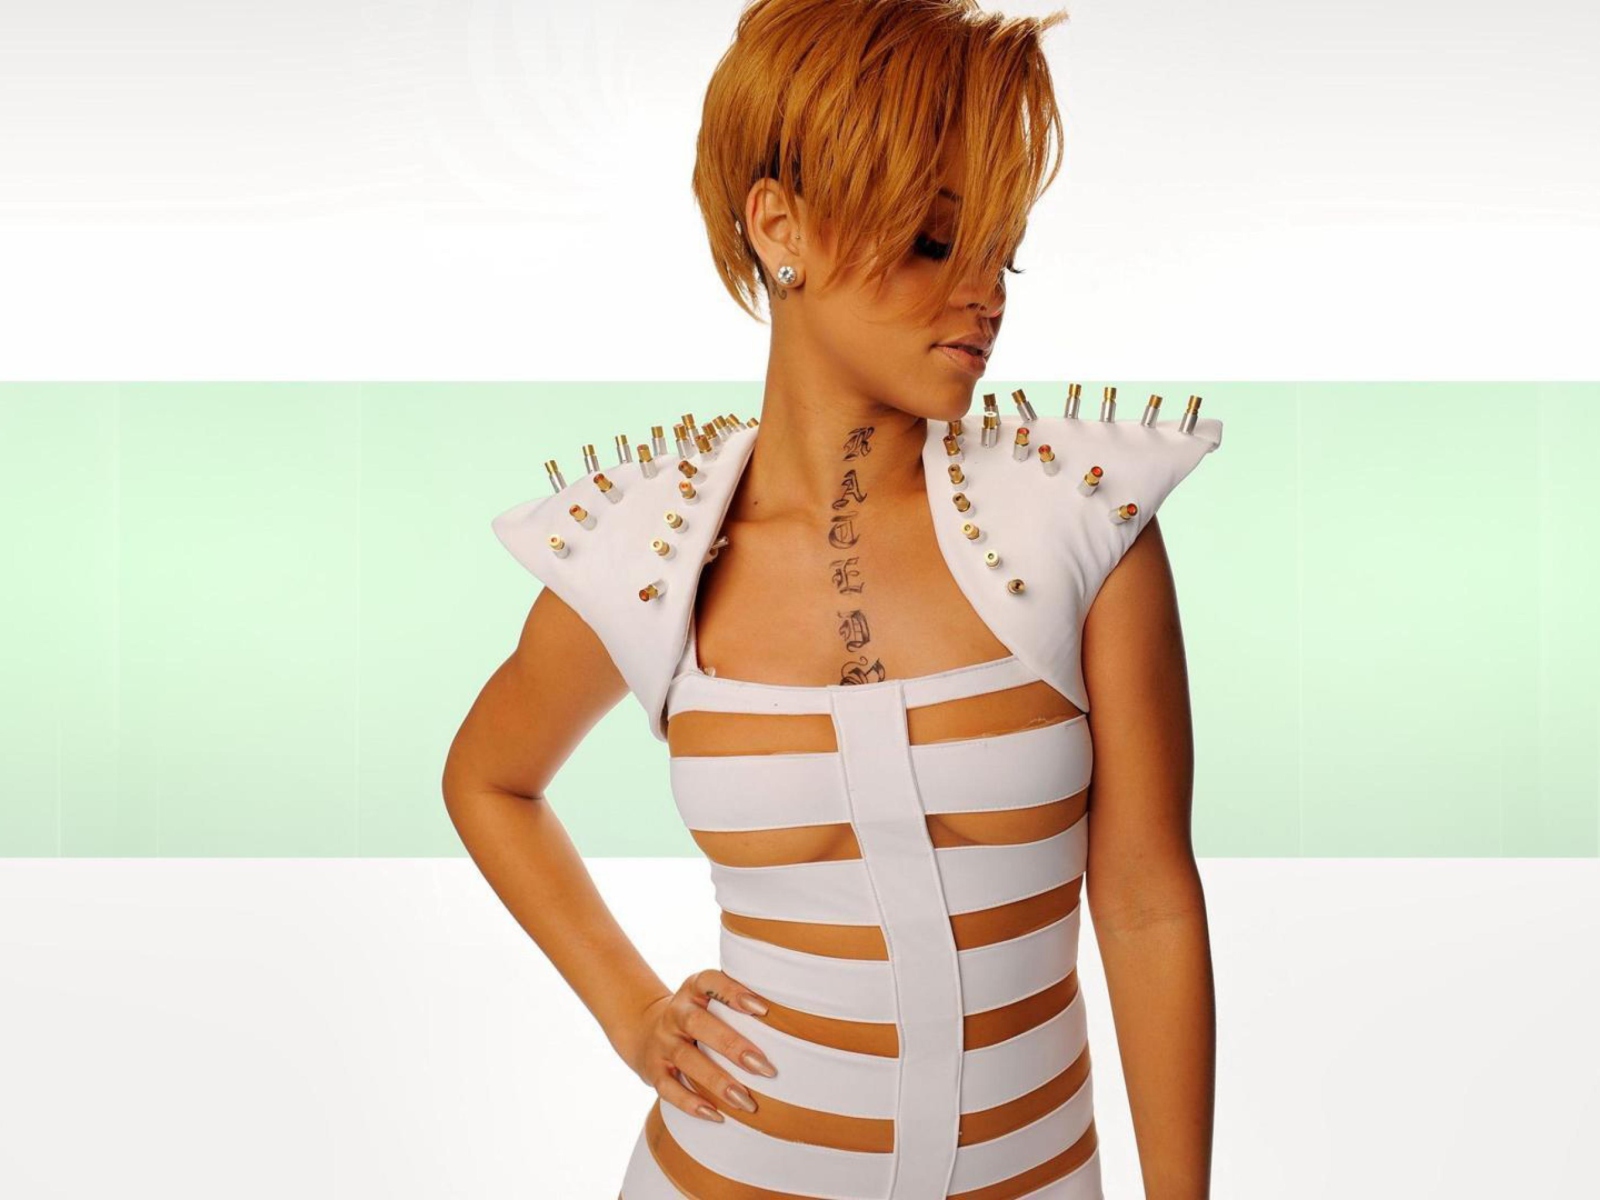 Hot Rihanna In White Top wallpaper 1600x1200